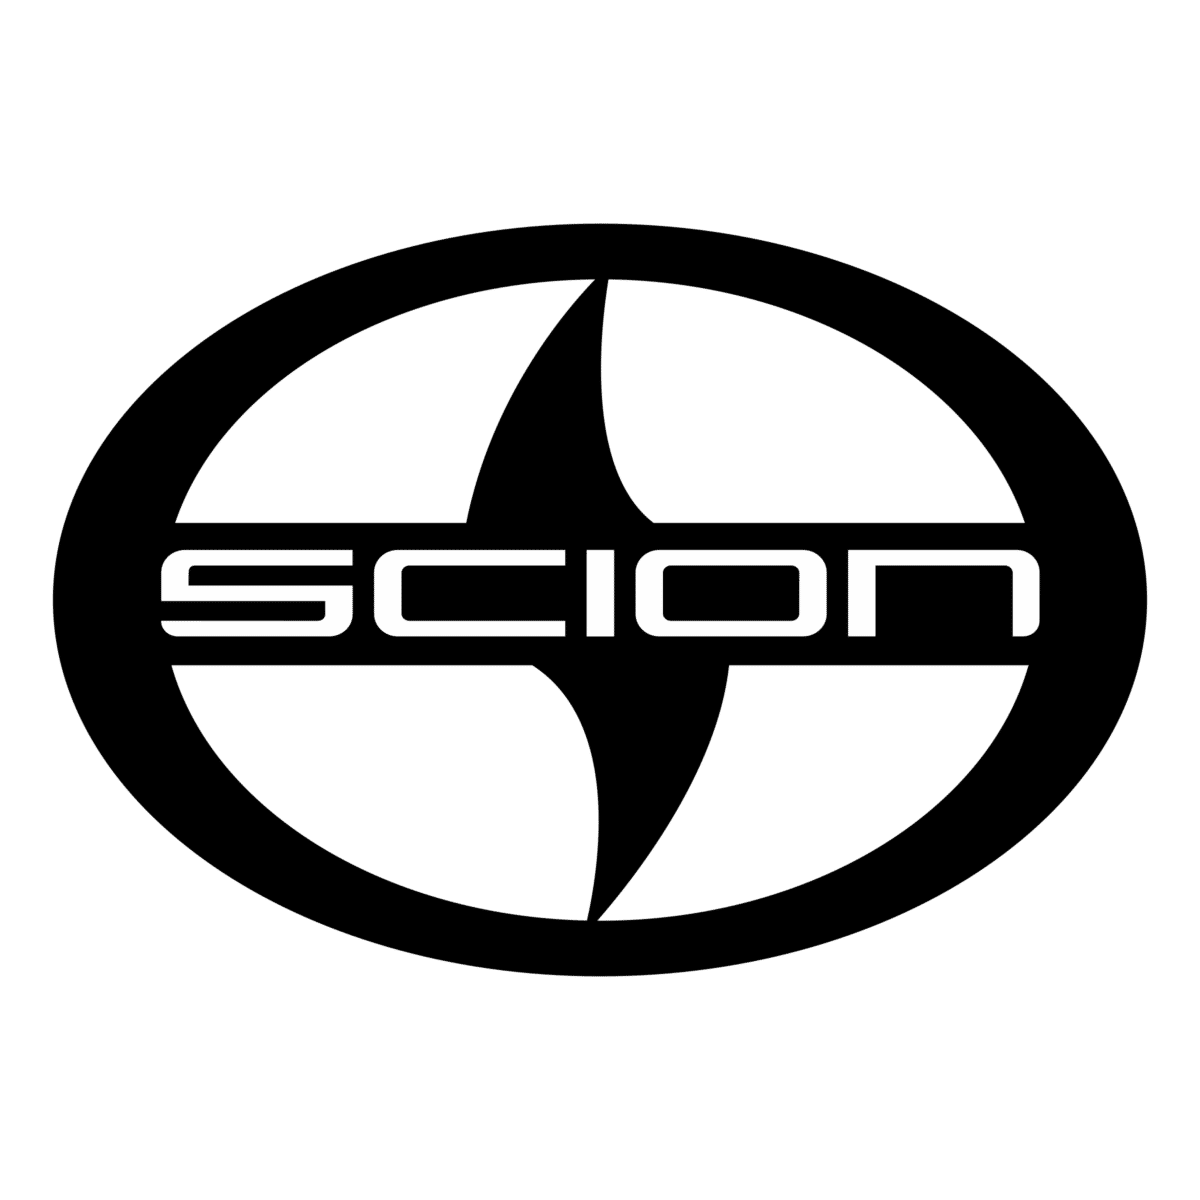 scion-logo-png-transparent